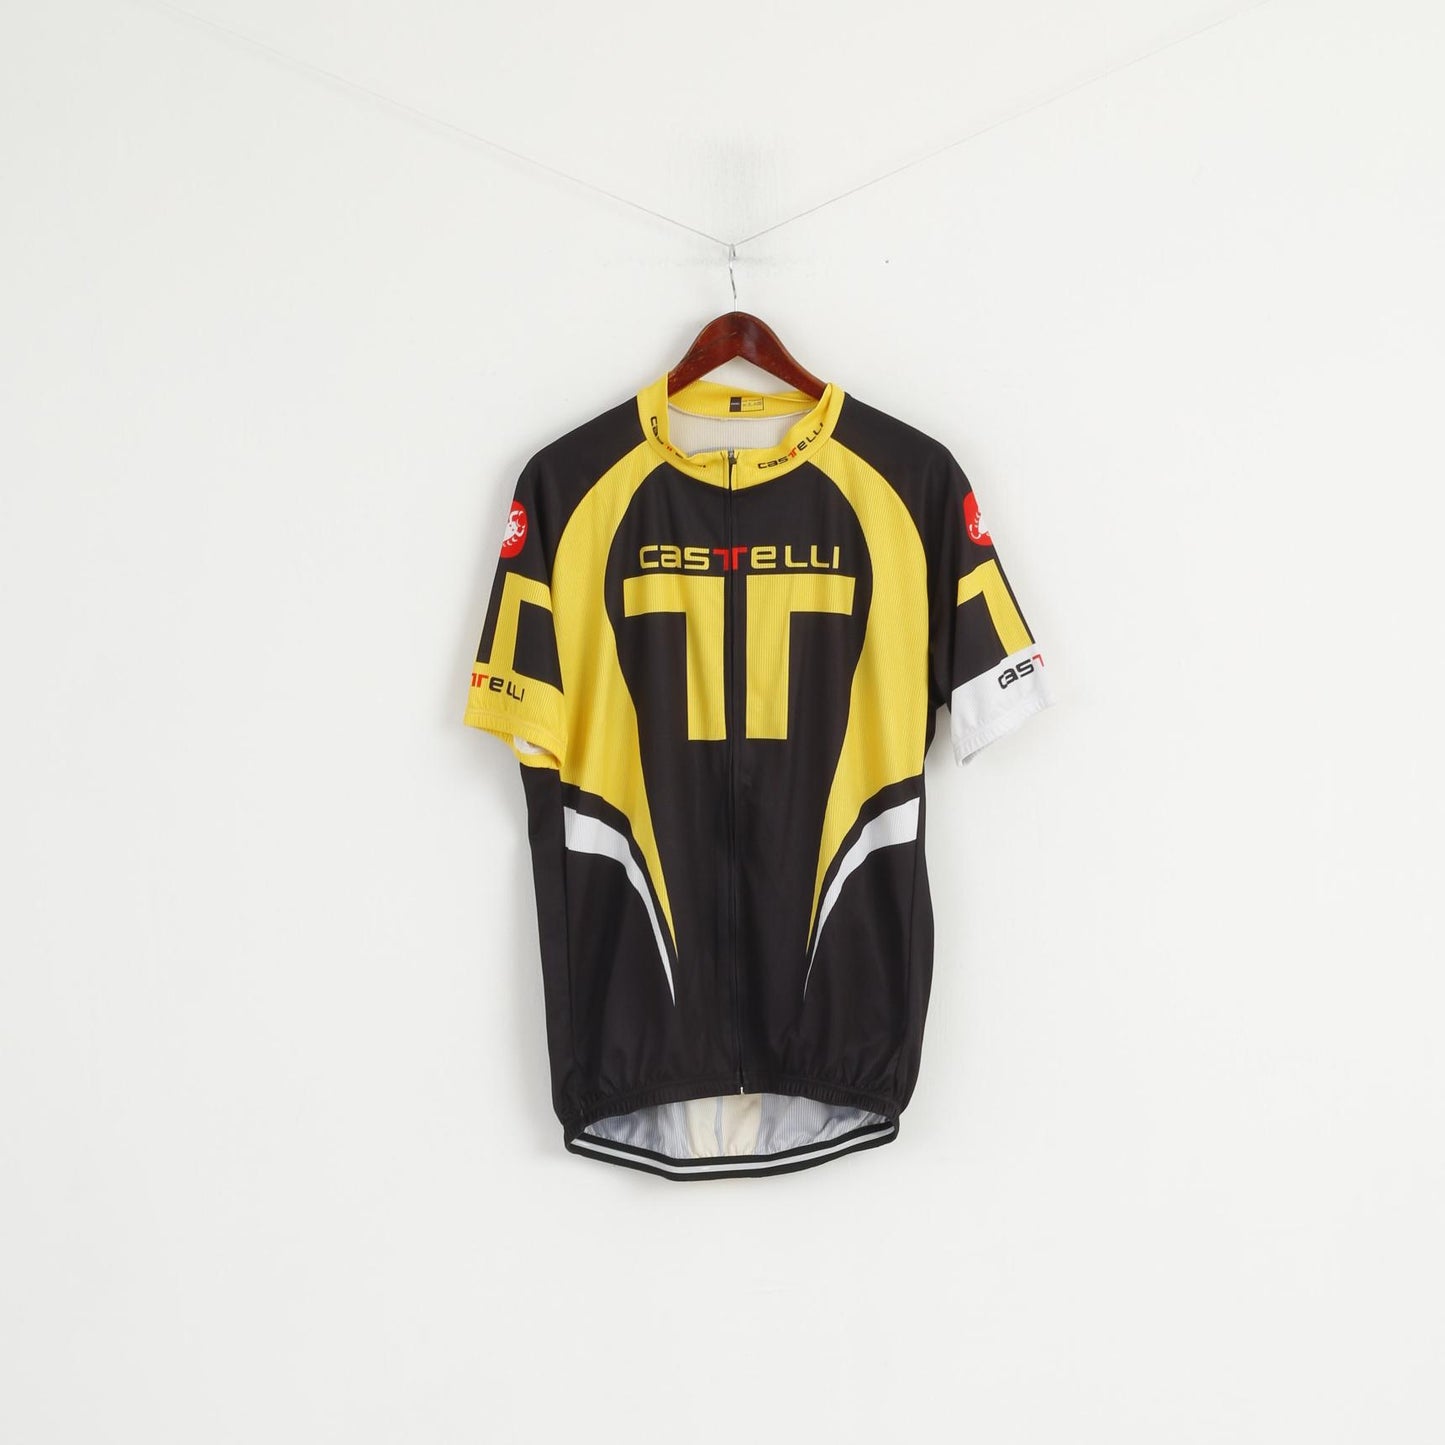 Castelli Men 4XL (XXL) Cycling Shirt Yellow Black Race Bike Full Zipper Jersey Top